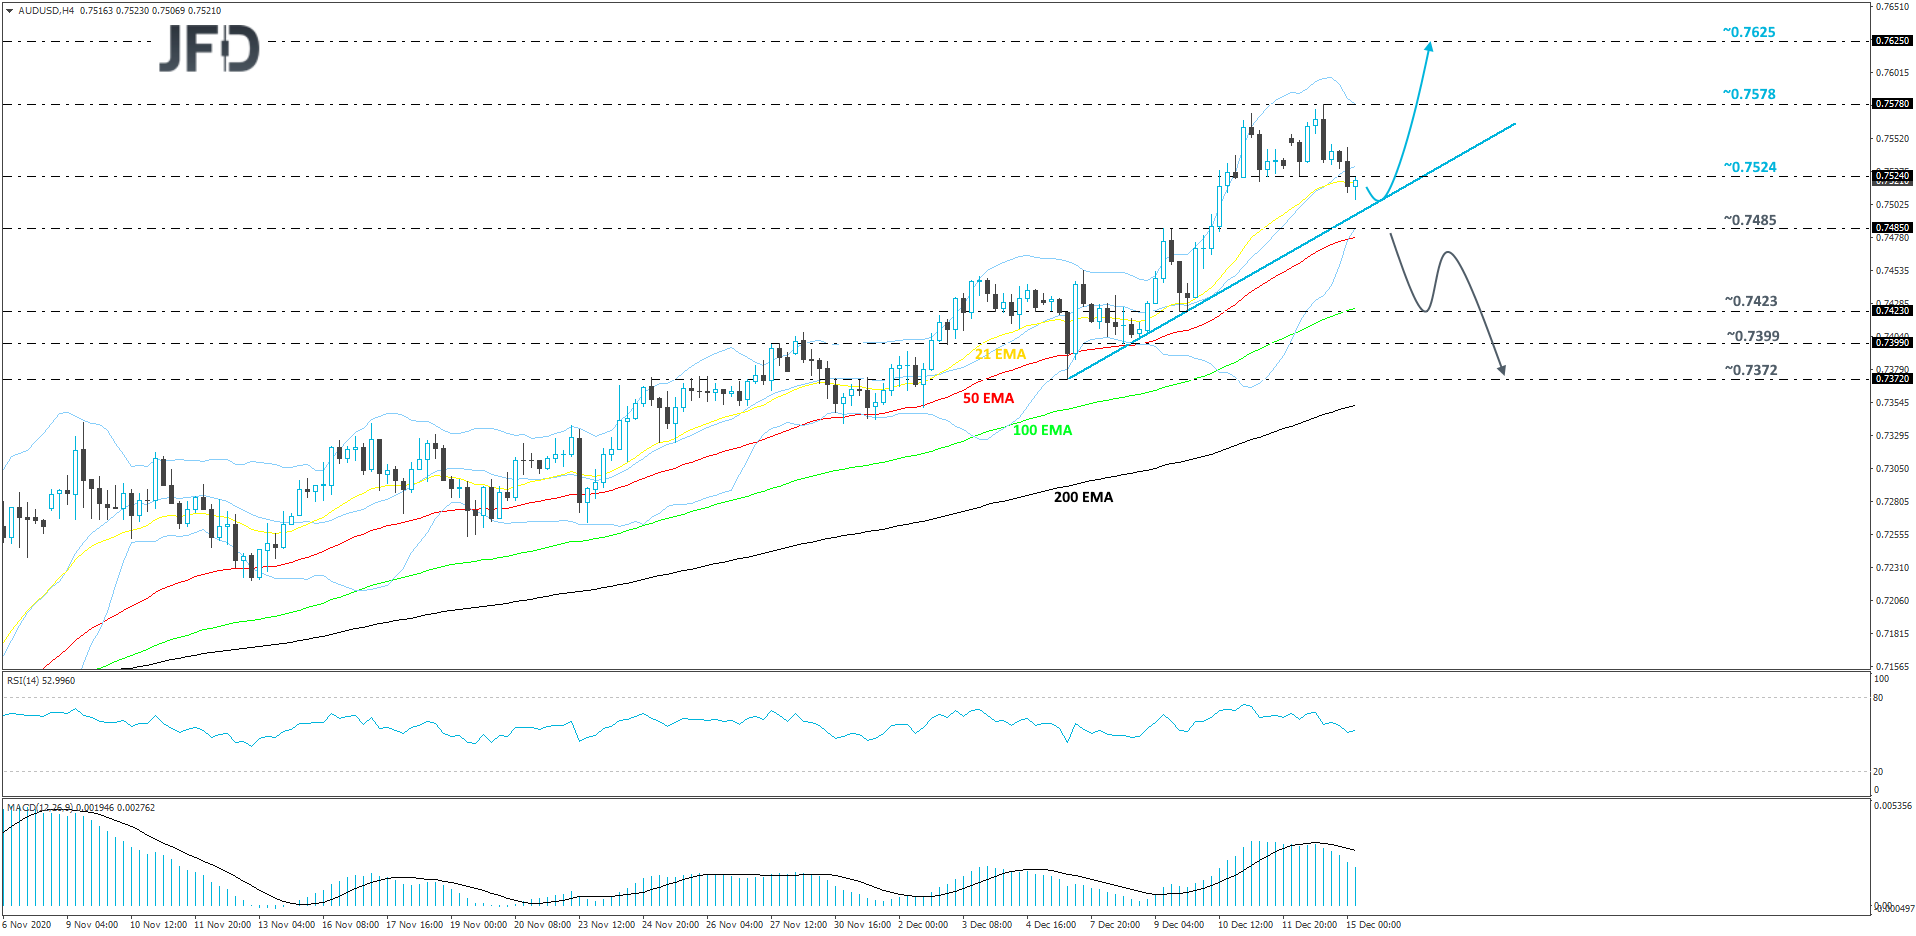 AUD/USD 4-hour chart technical analysis